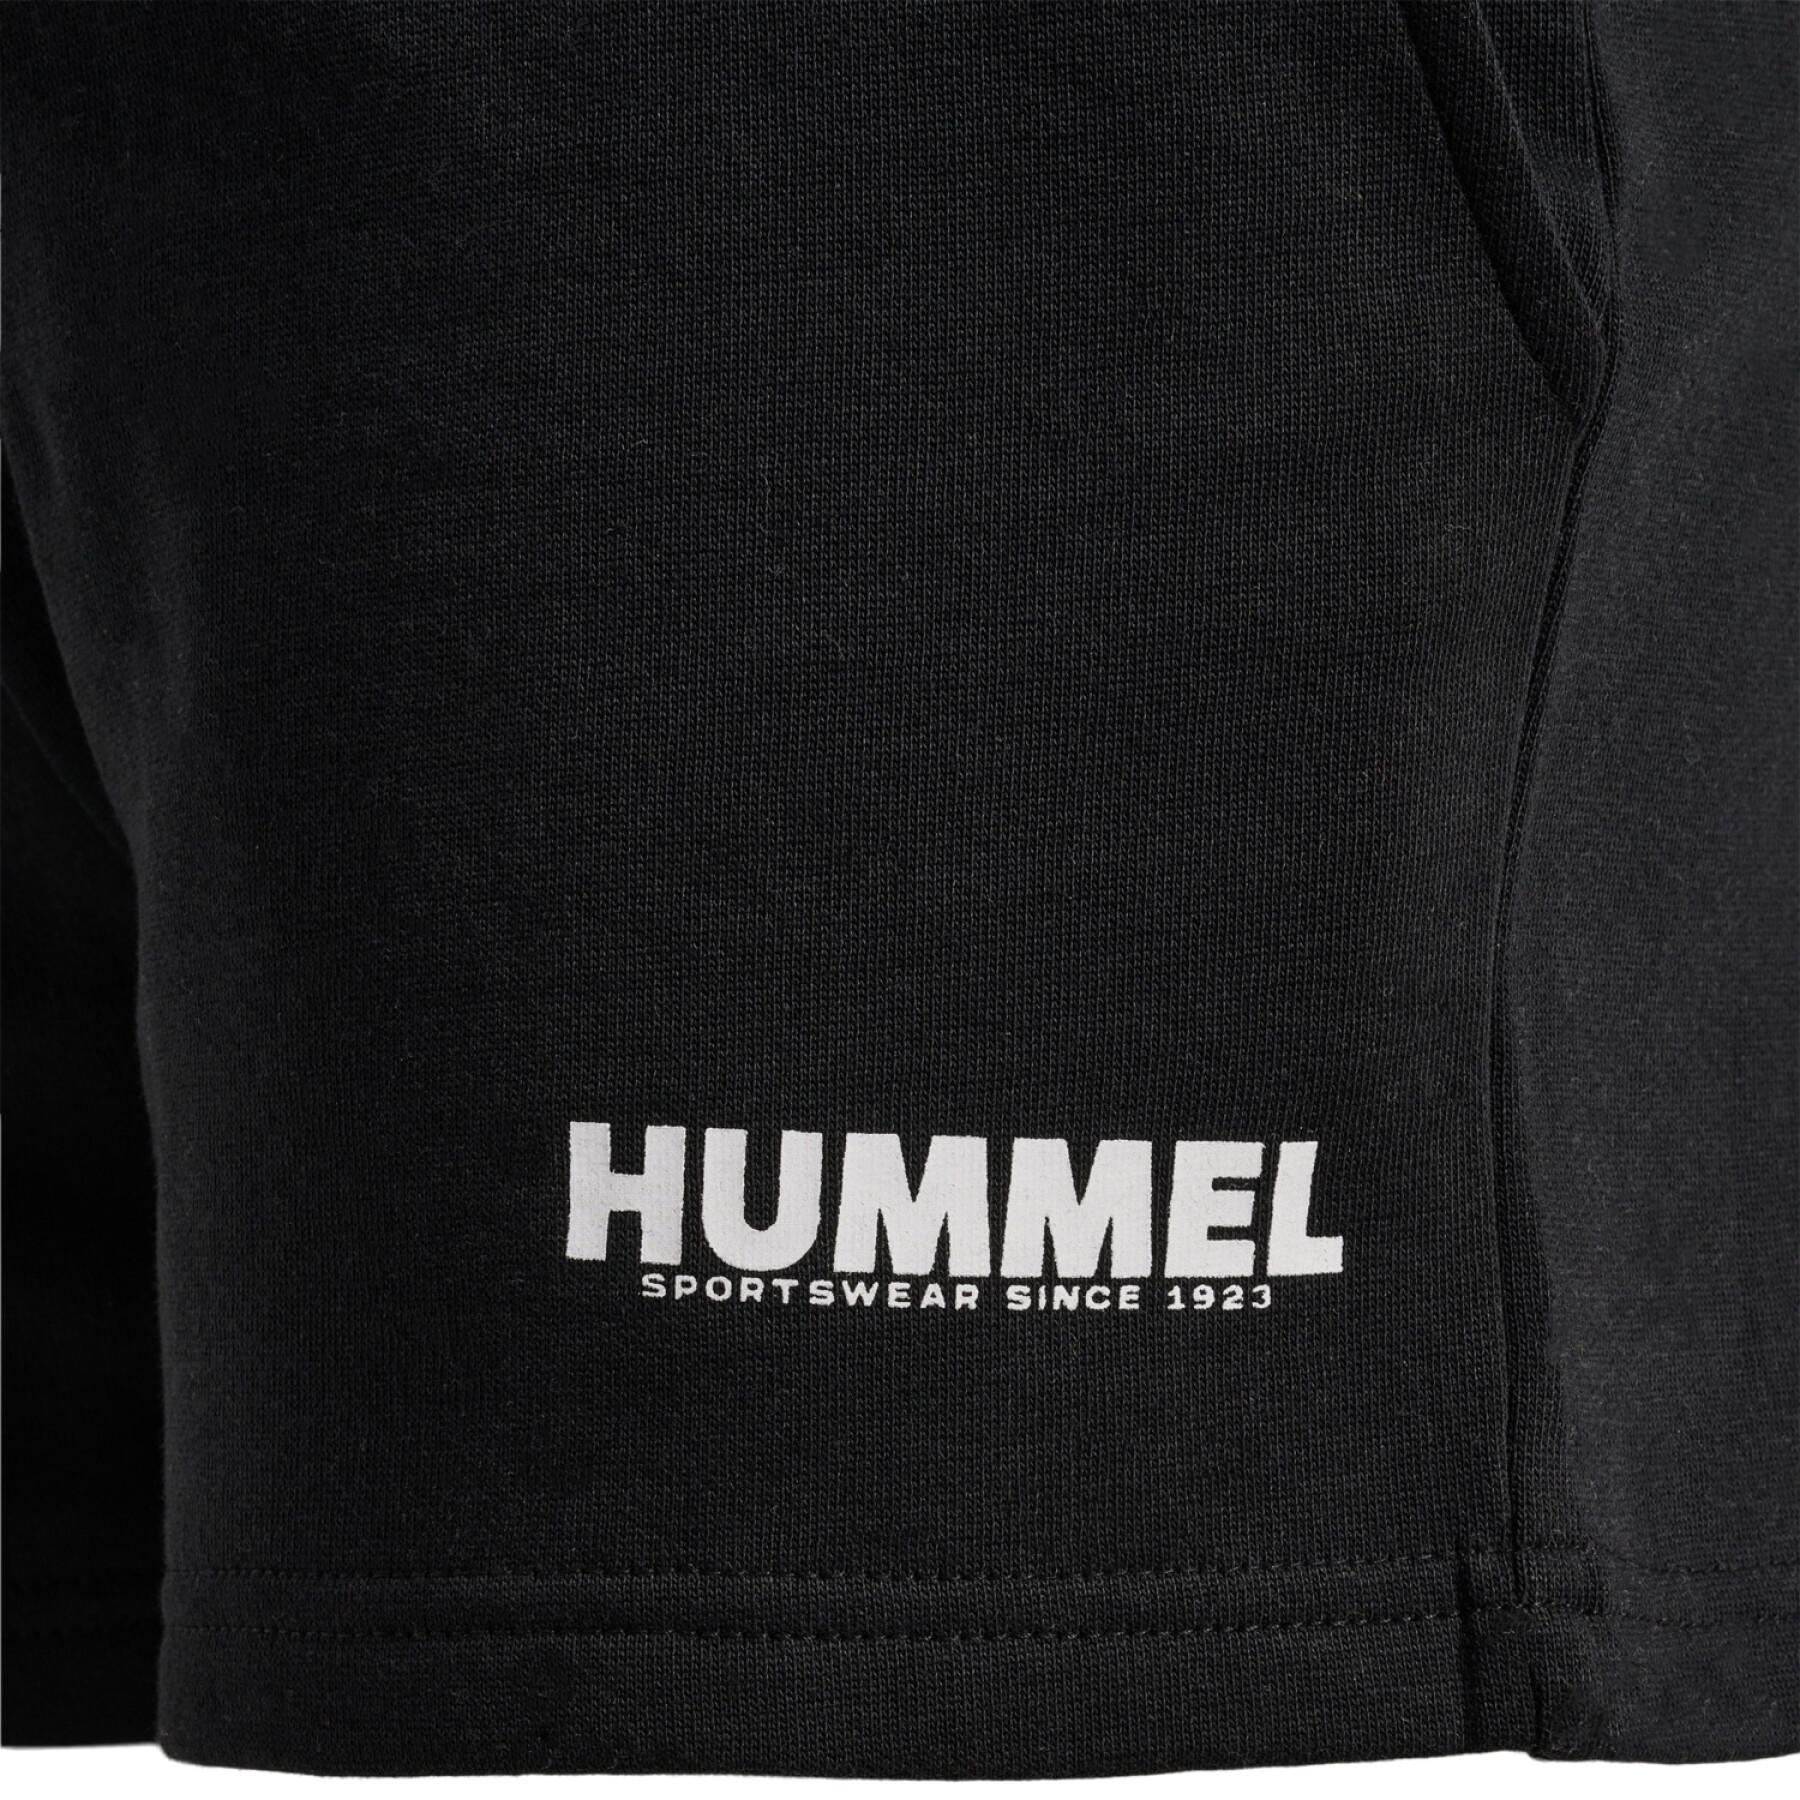 Hummel Legacy Hummel shorts - - Brands - Lifestyle Women\'s